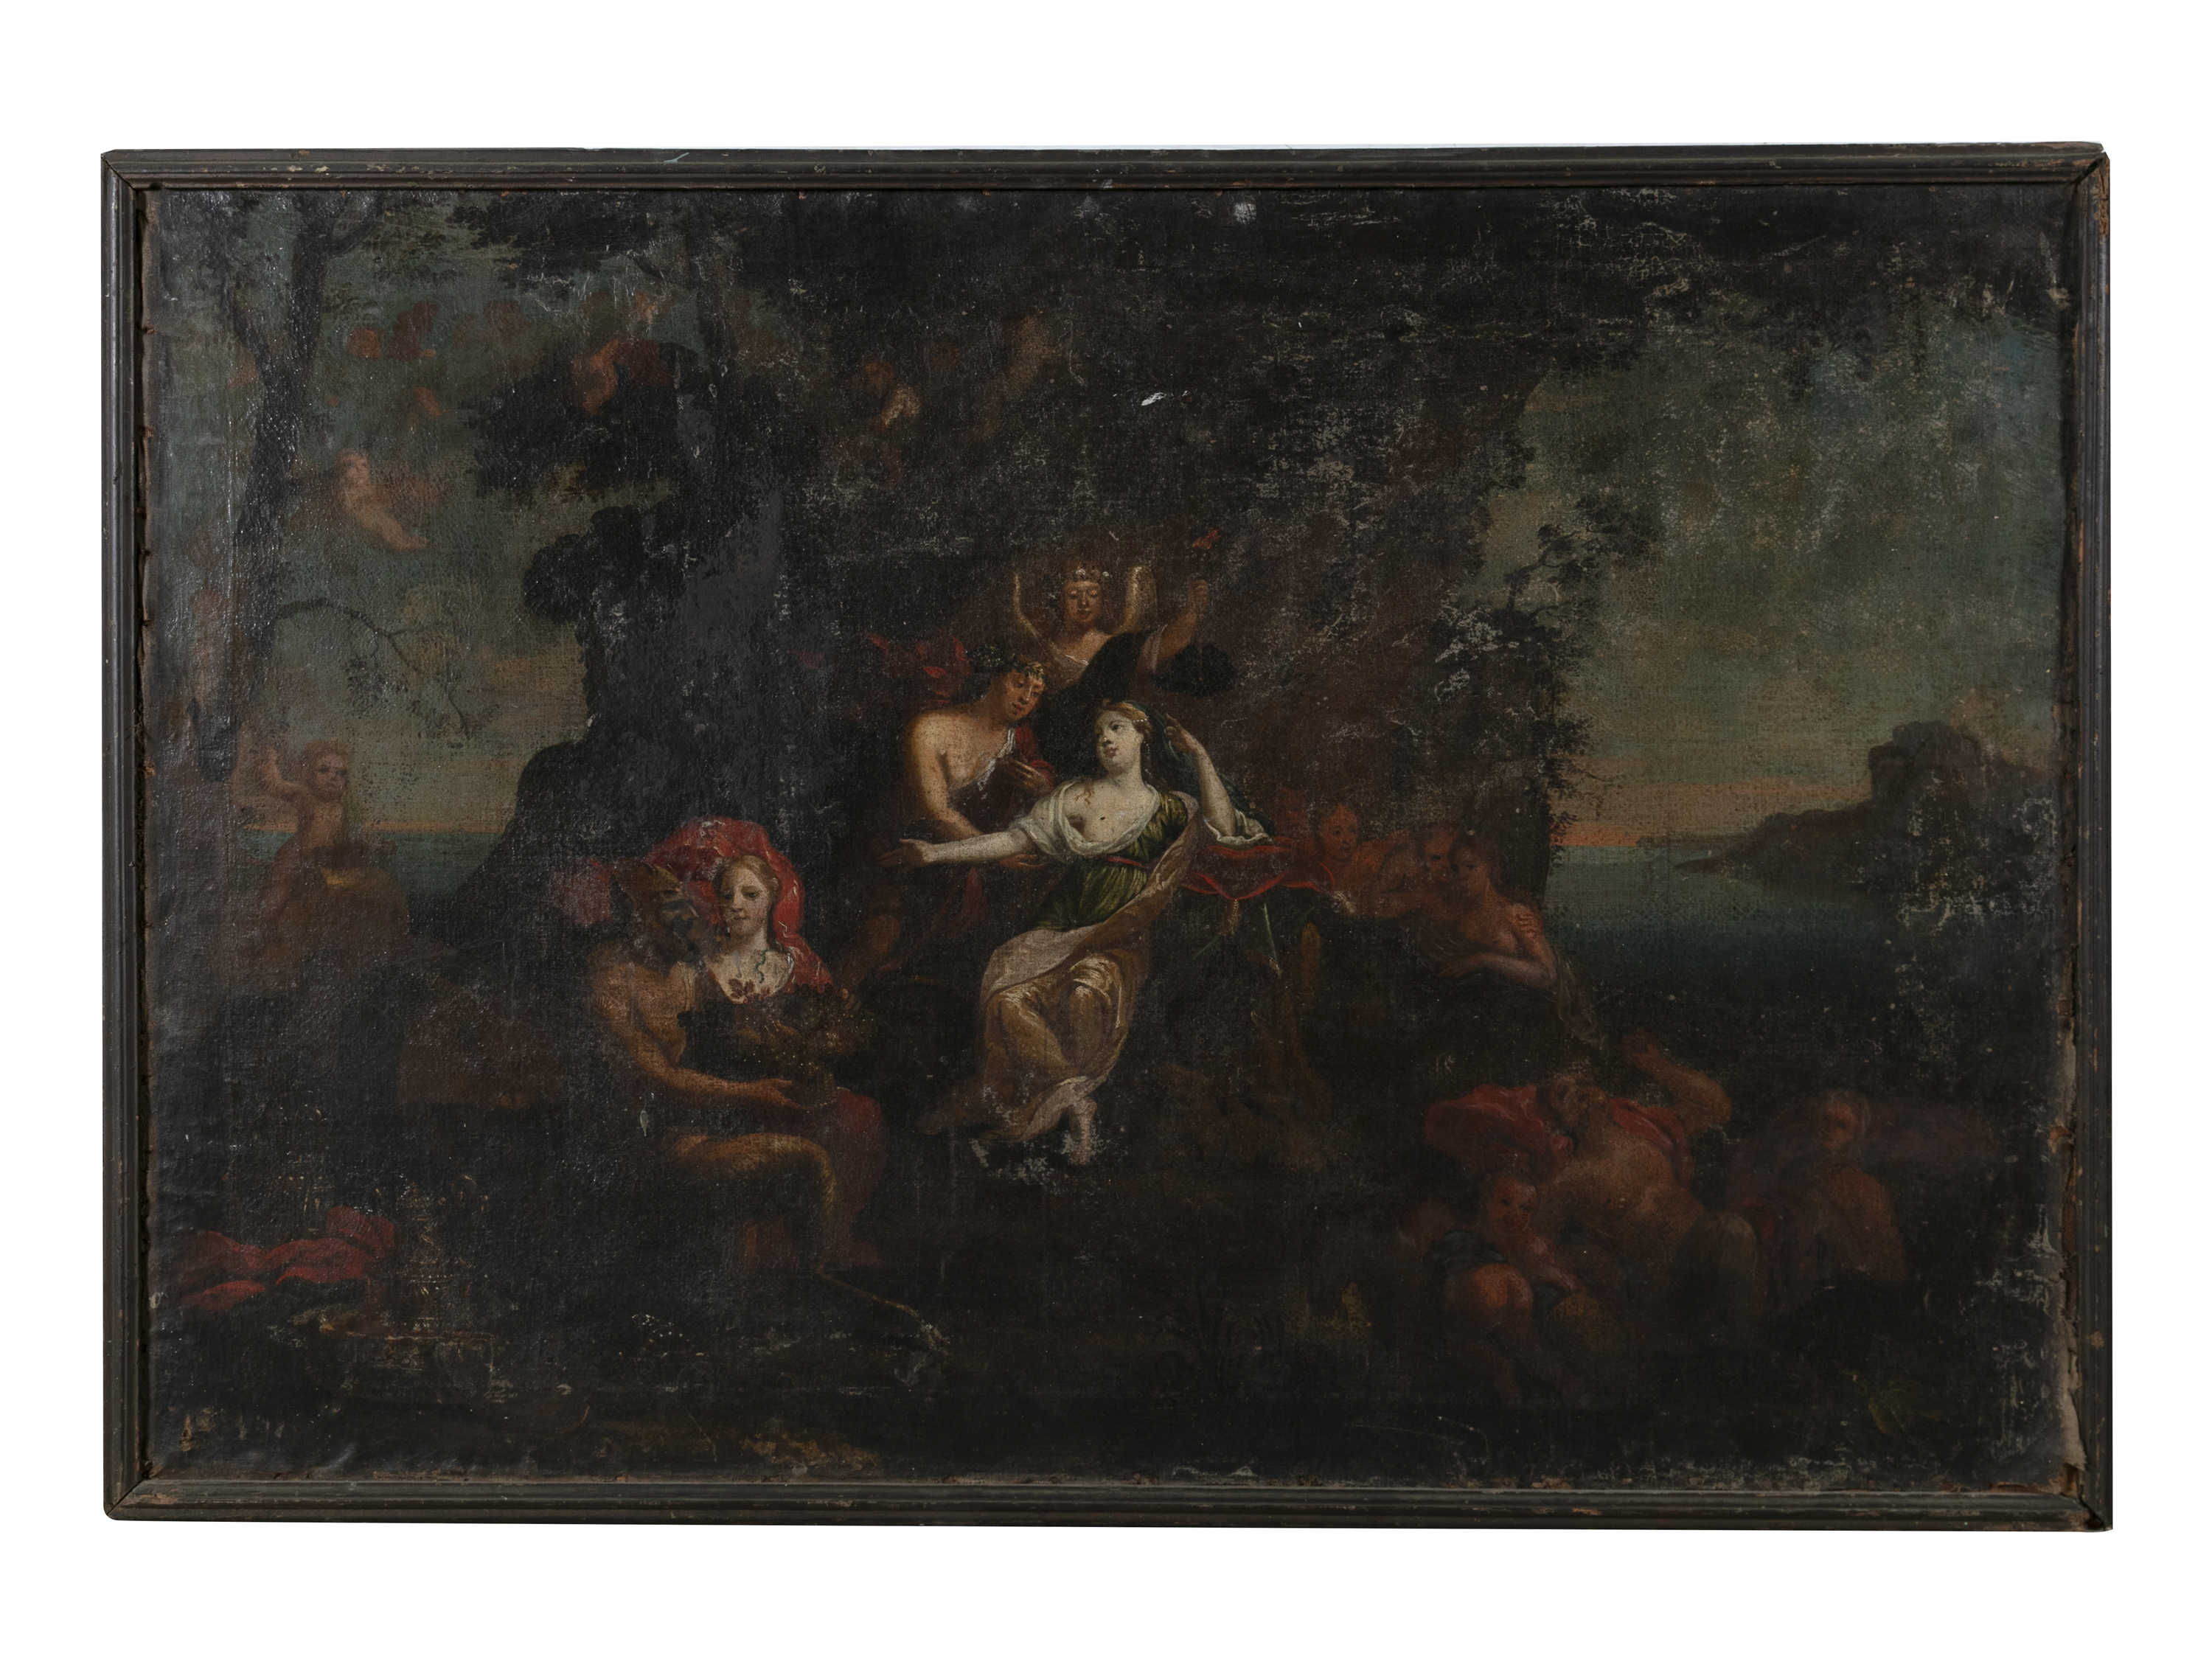 ITALIAN SCHOOL (18TH CENTURY) Mythological Scene Oil on canvas laid on board, 96 x 141cm Provenance: